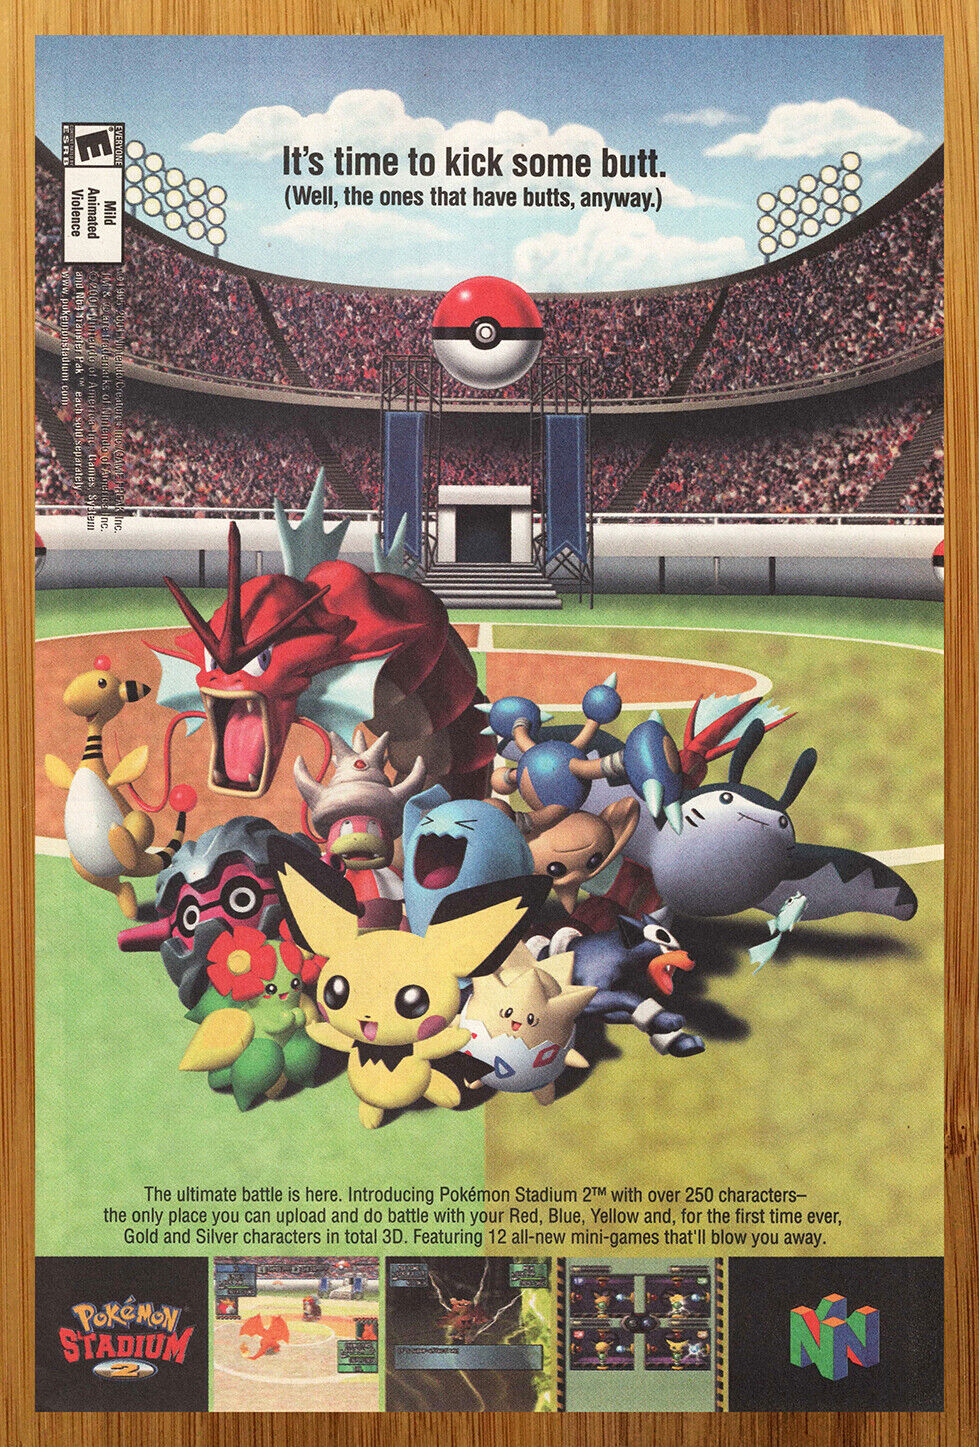 2001 Pokemon Stadium 2 N64 Print Ad/Poster Authentic Official Nintendo Promo Art